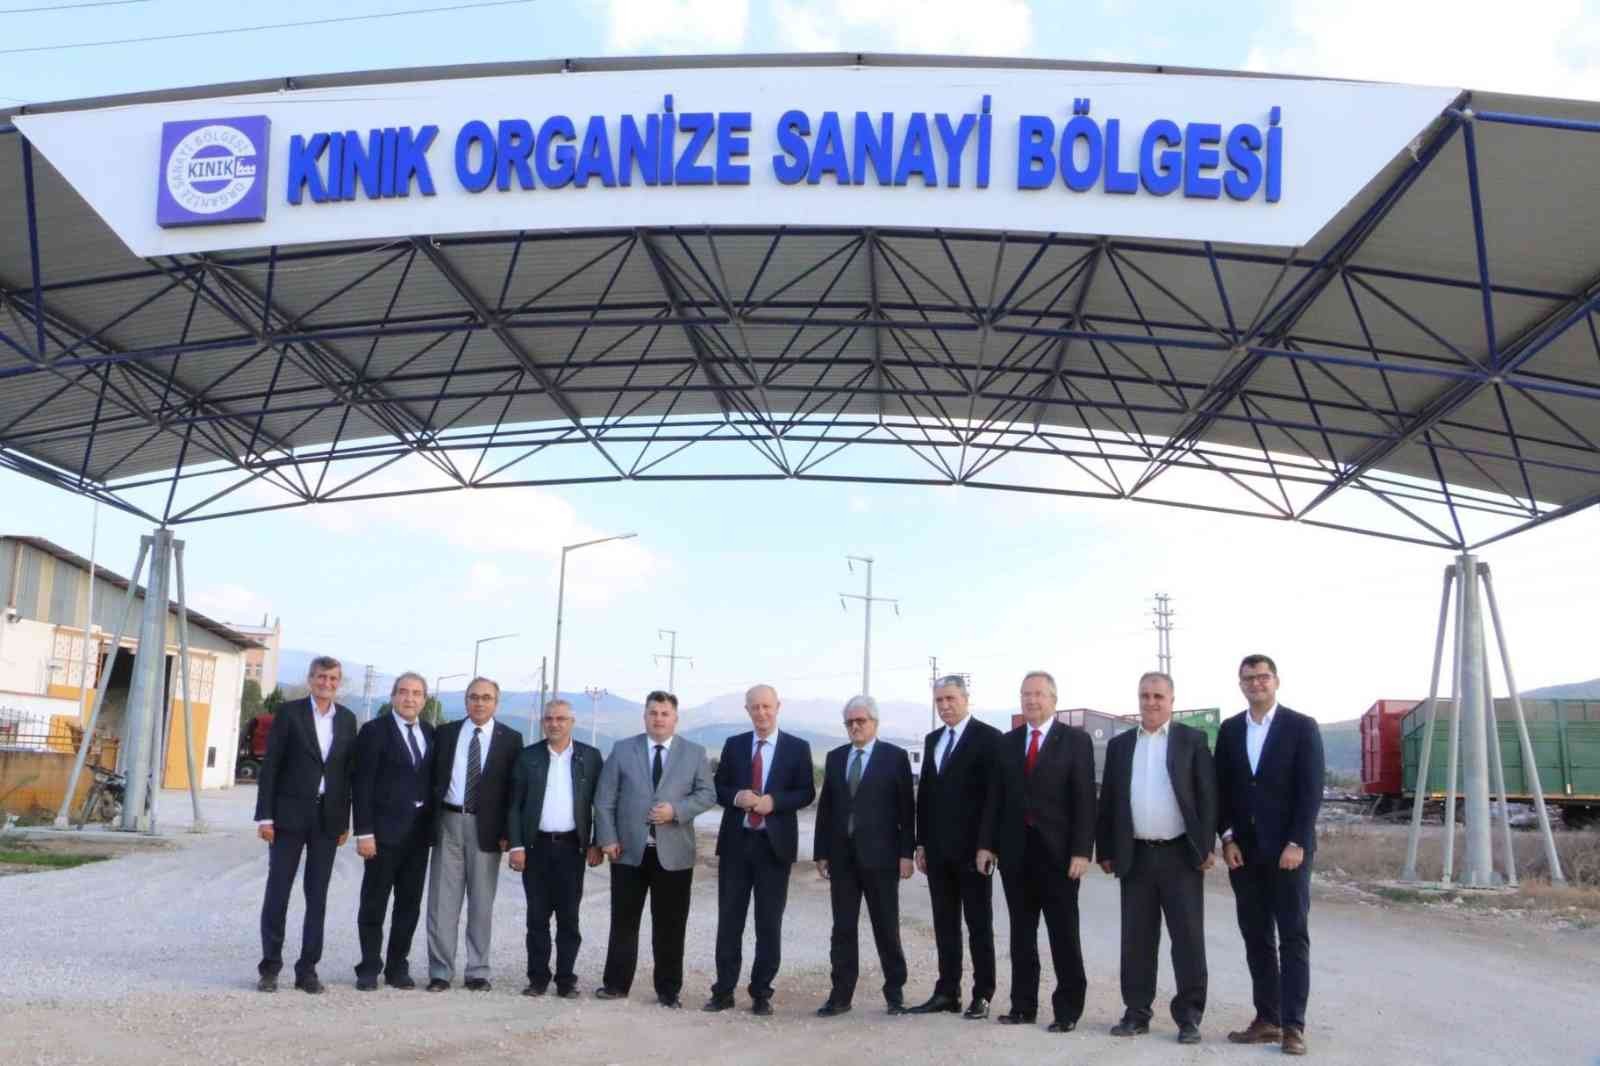 Kınık’ta taşımalı doğal gaz devri bitti: Fabrikalara doğal gaz müjdesi #izmir